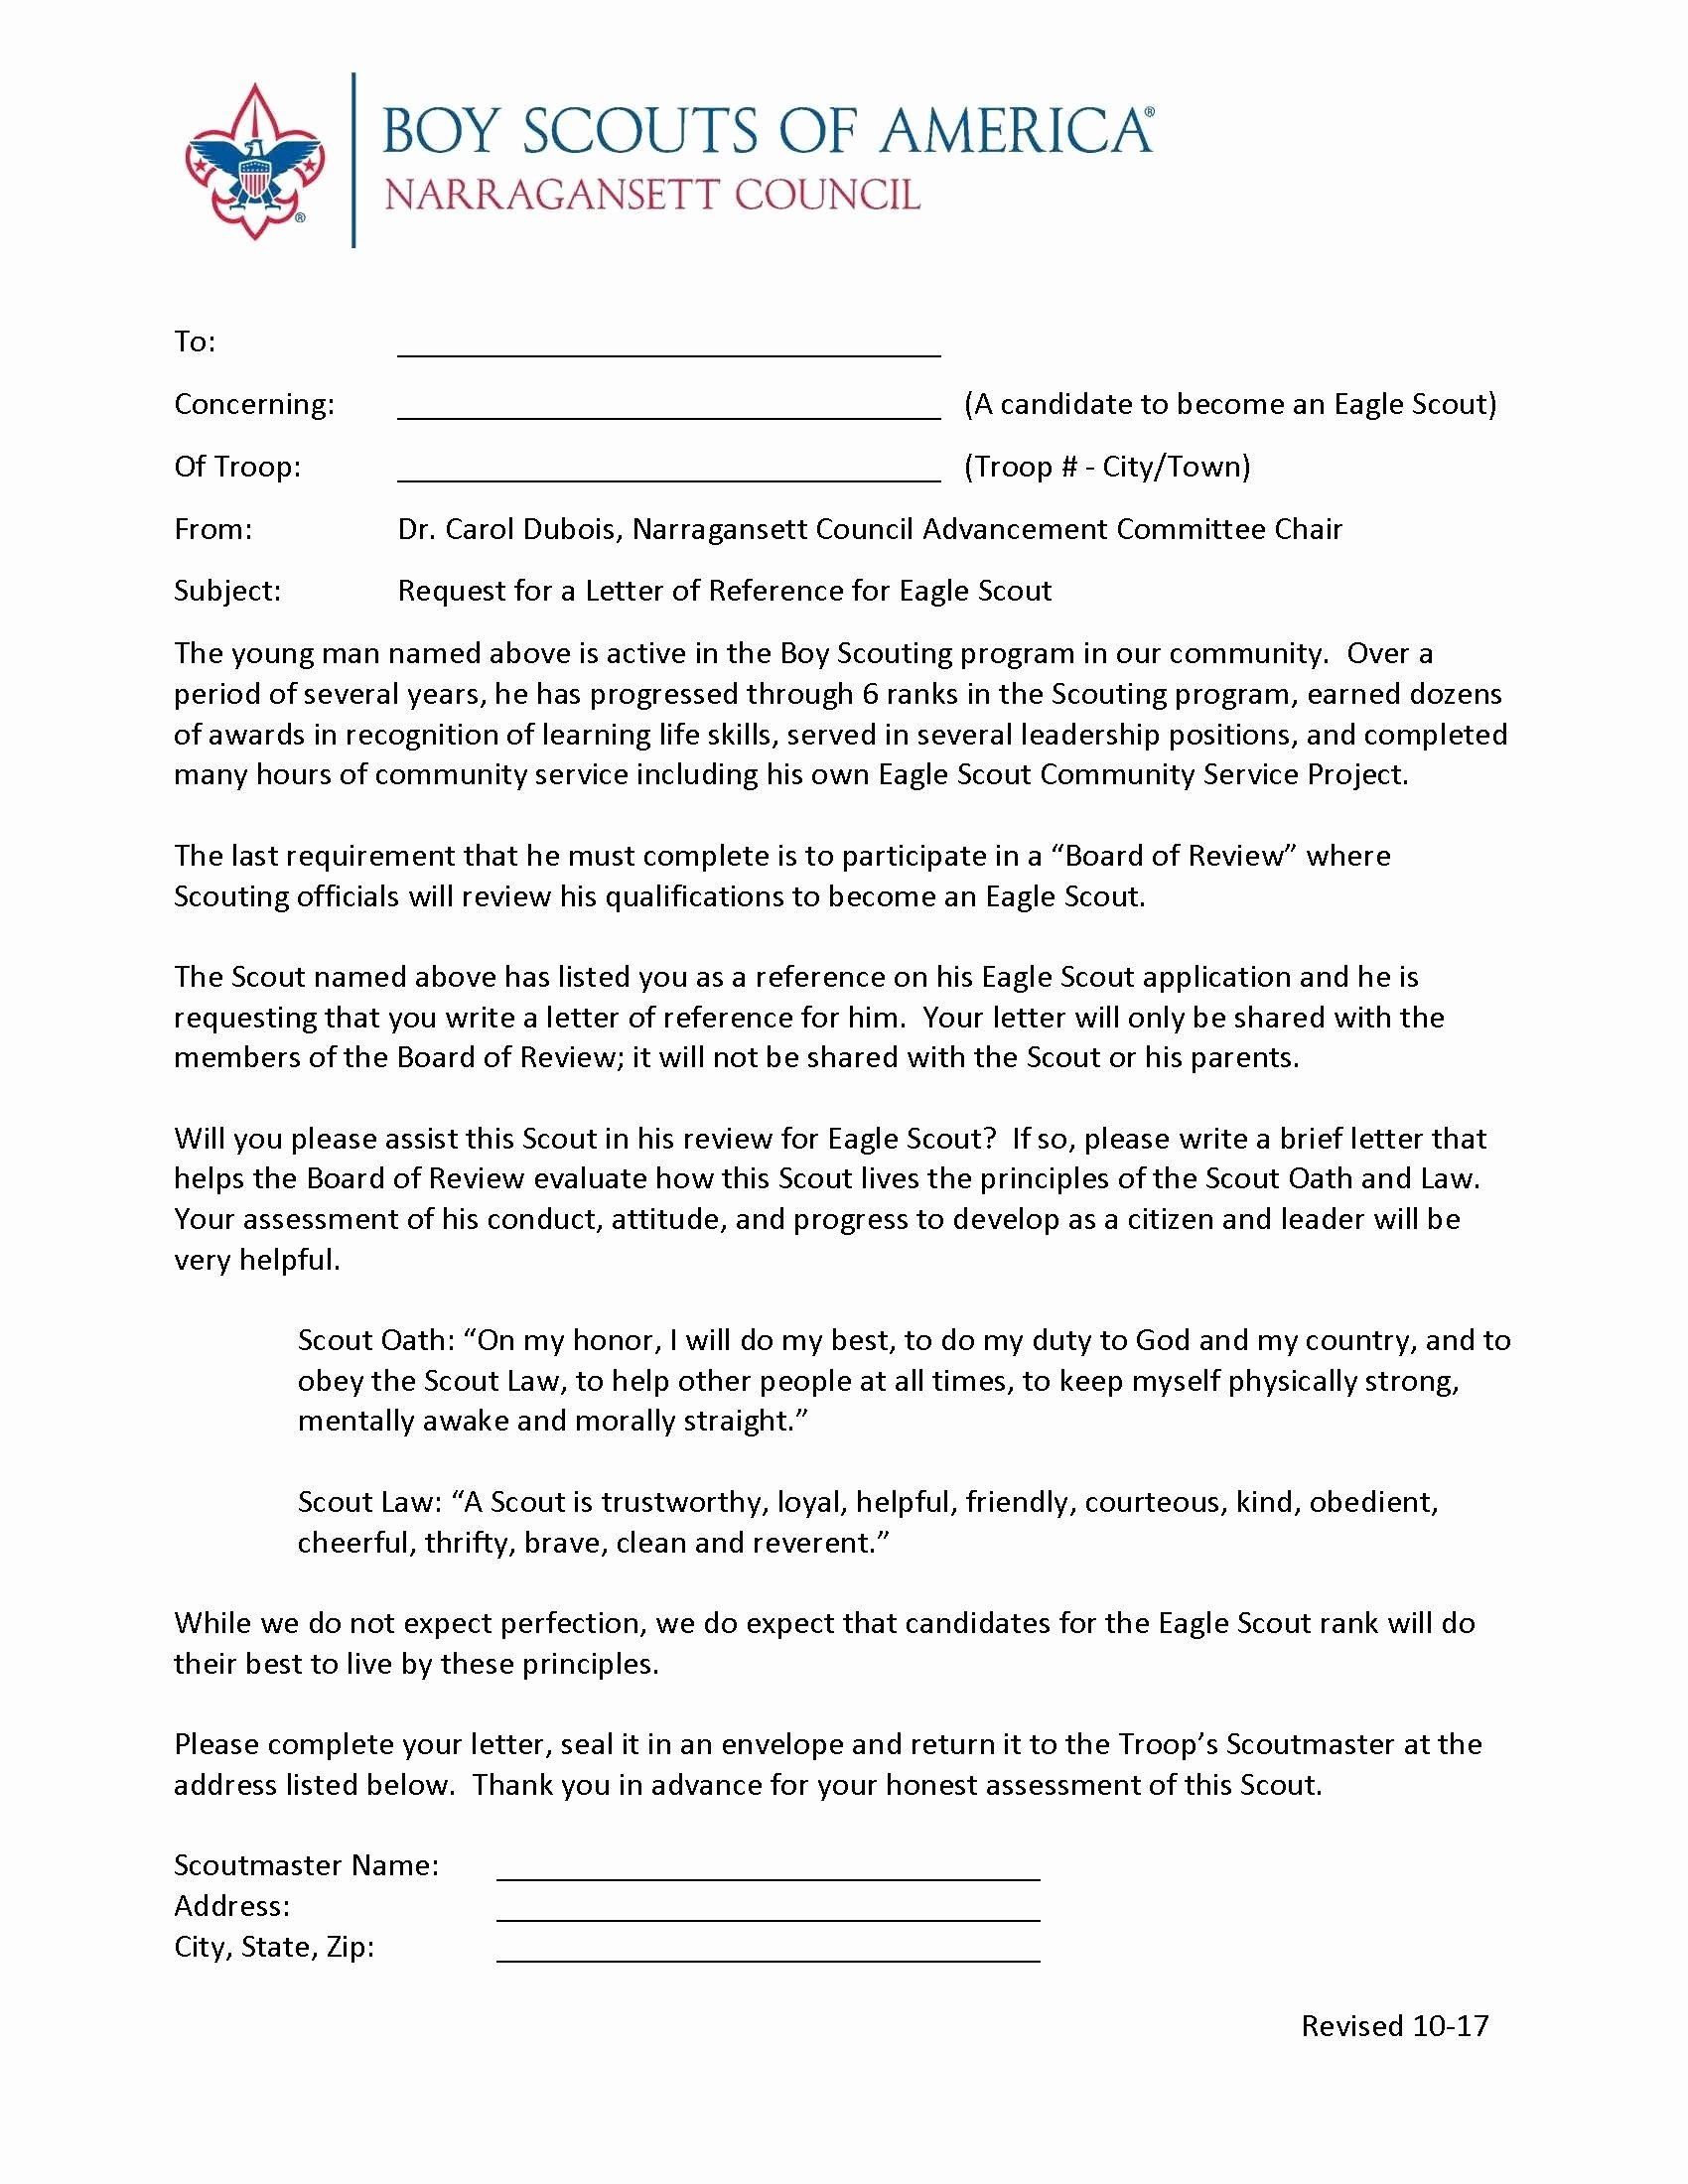 Eagle Scout Letter Of Ambition Example Unique Eagle Scout Donation Letter Template Bluemooncatering